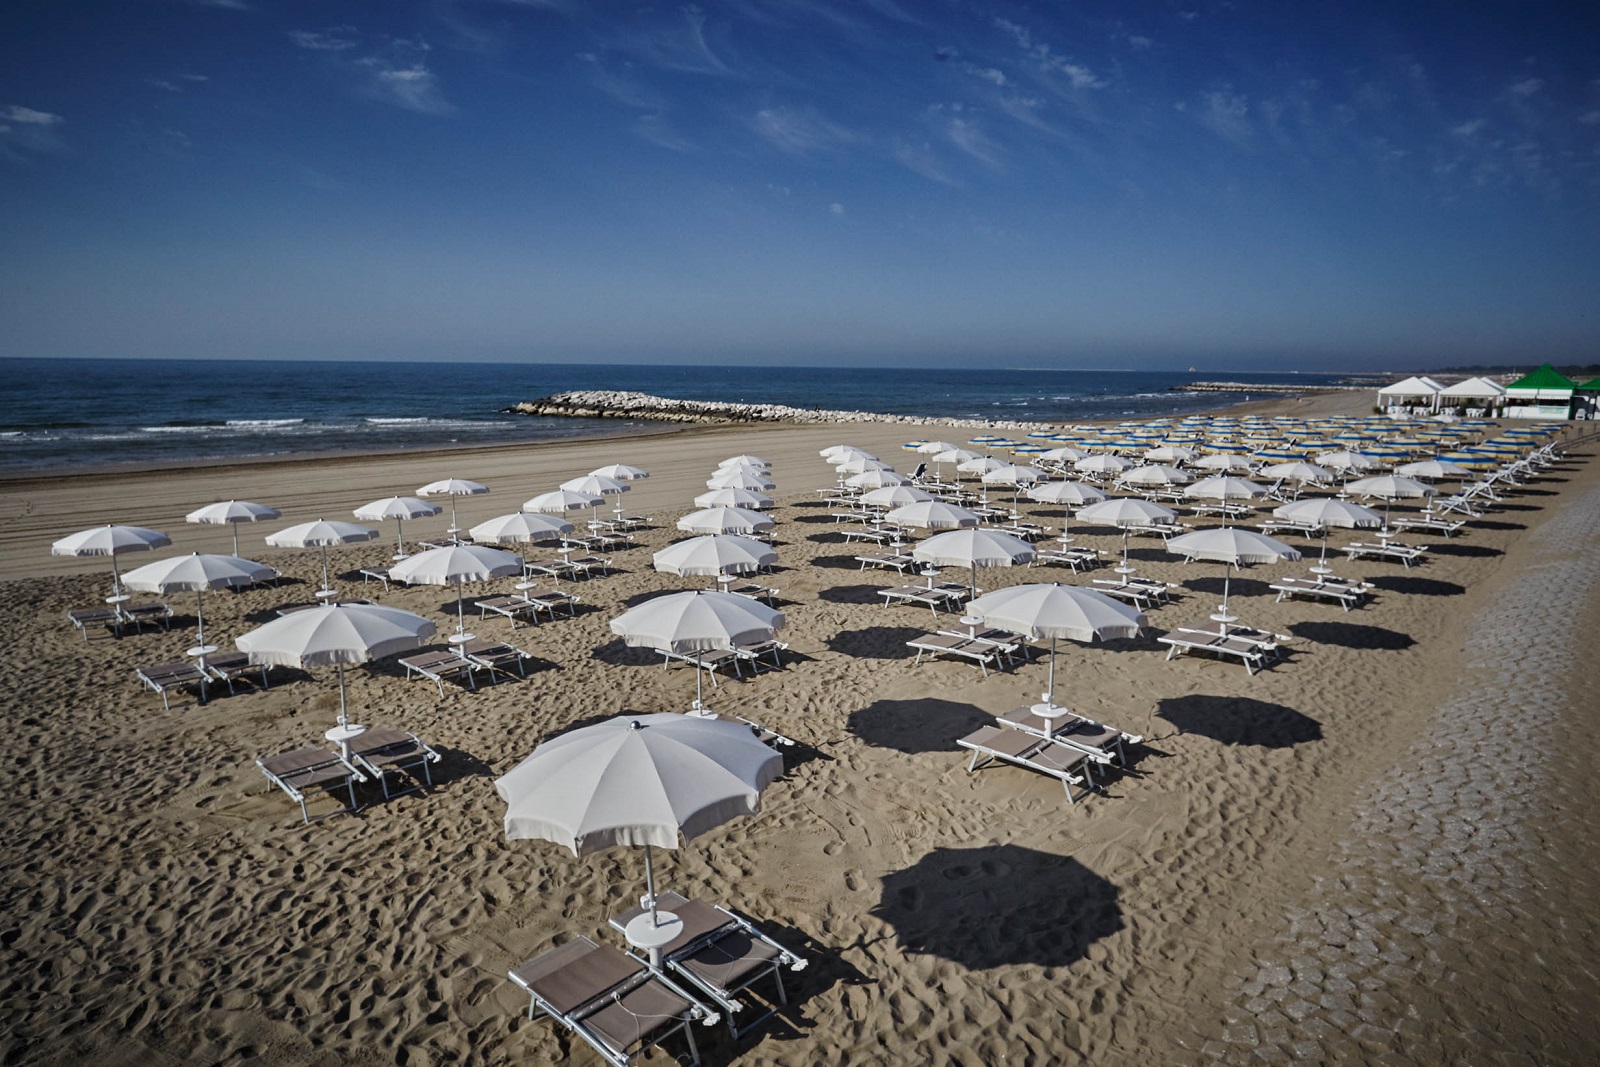 Foto de Spiaggia di Cavallino Treporti com alto nível de limpeza